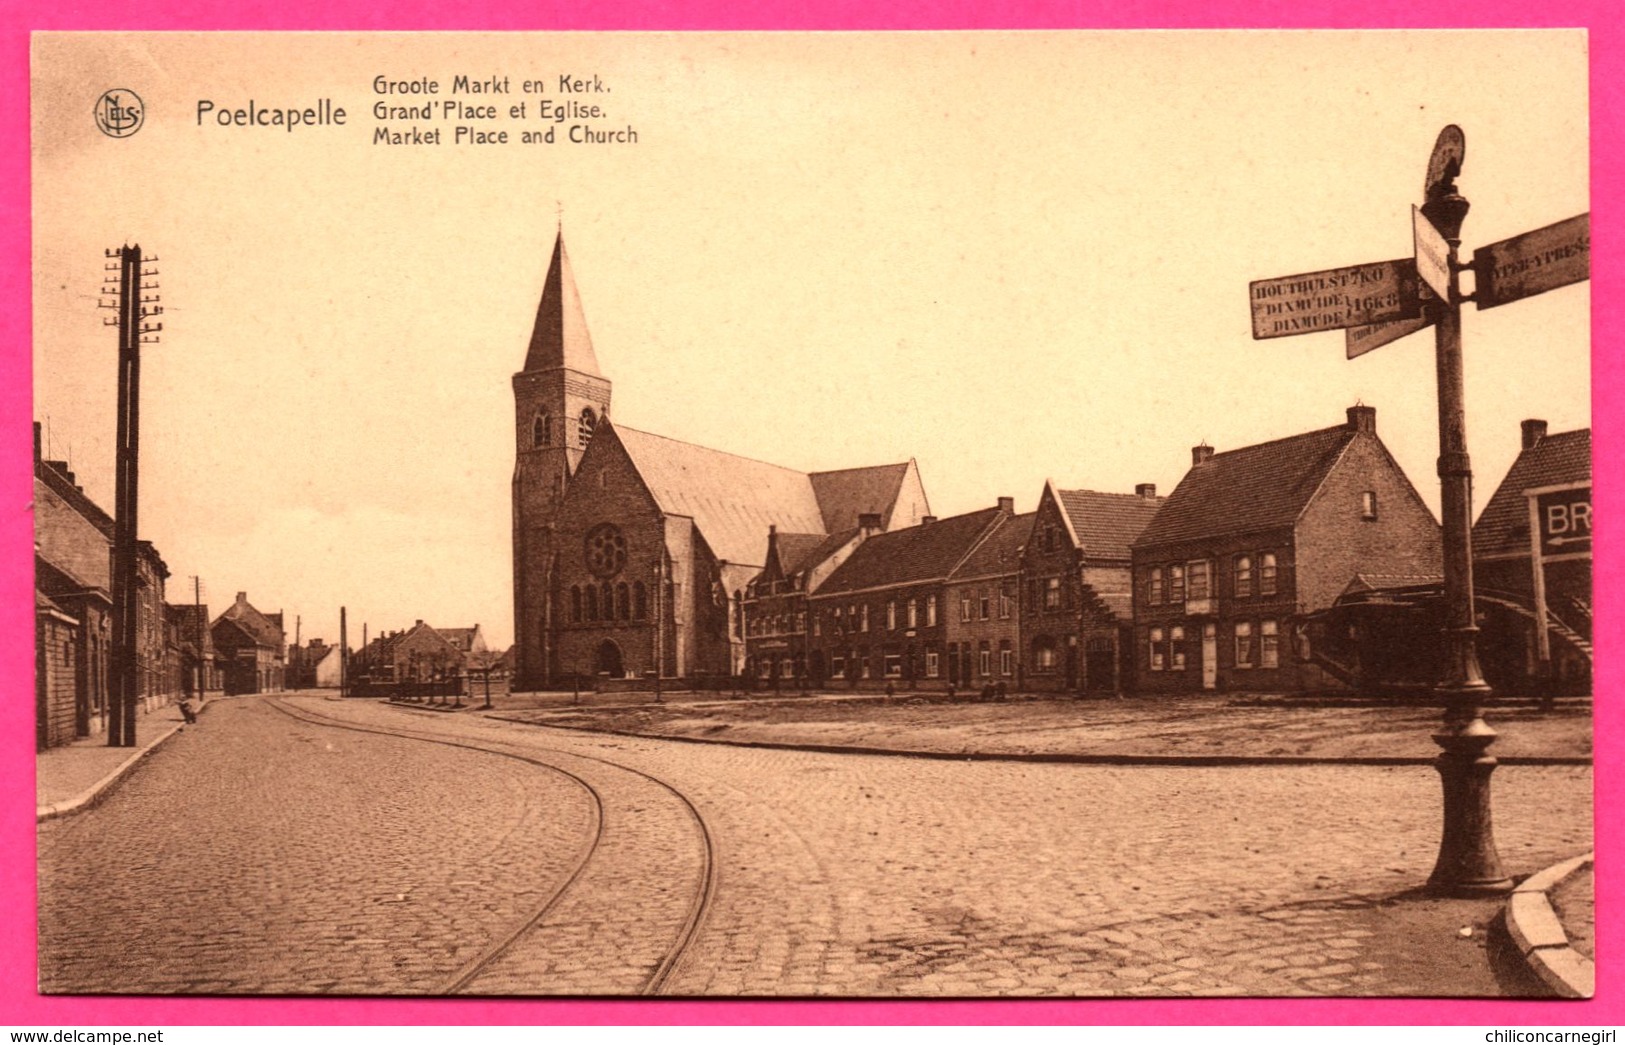 Poelcapelle - Grand'Place Et Église - Groote Markt En Kerk - Market Place And Church - Rails - NELS - H. NUYTTENS - Langemark-Poelkapelle